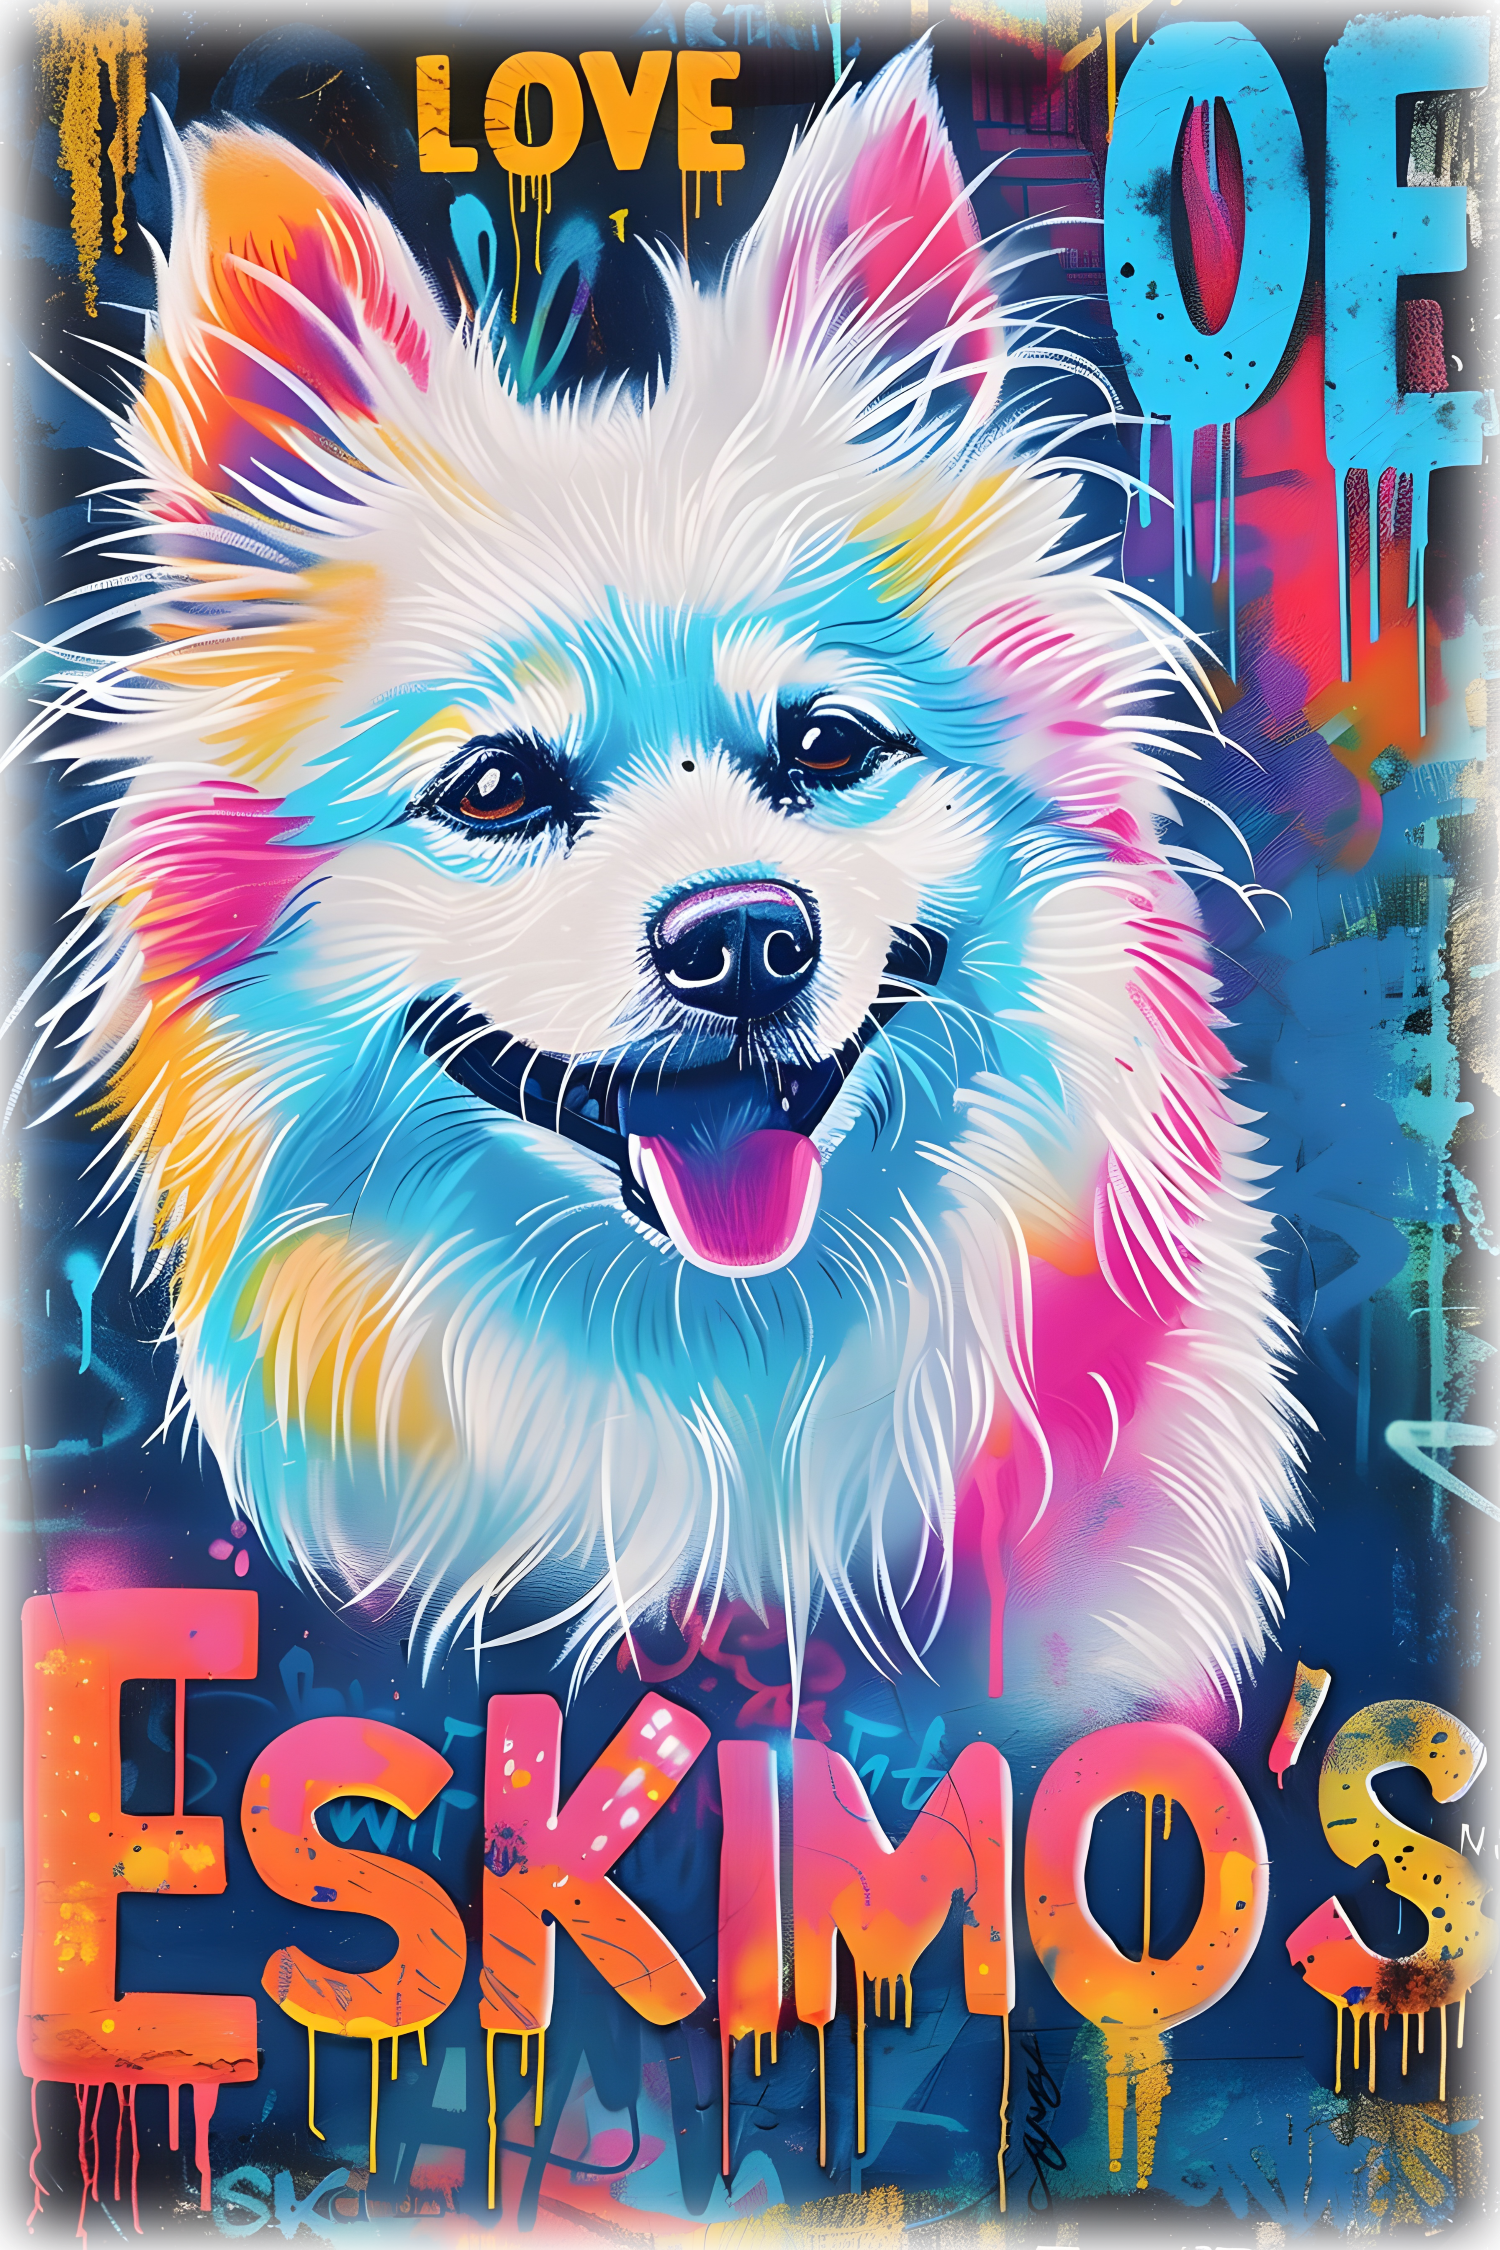 American Eskimo Dog Women's short sleeve t-shirt